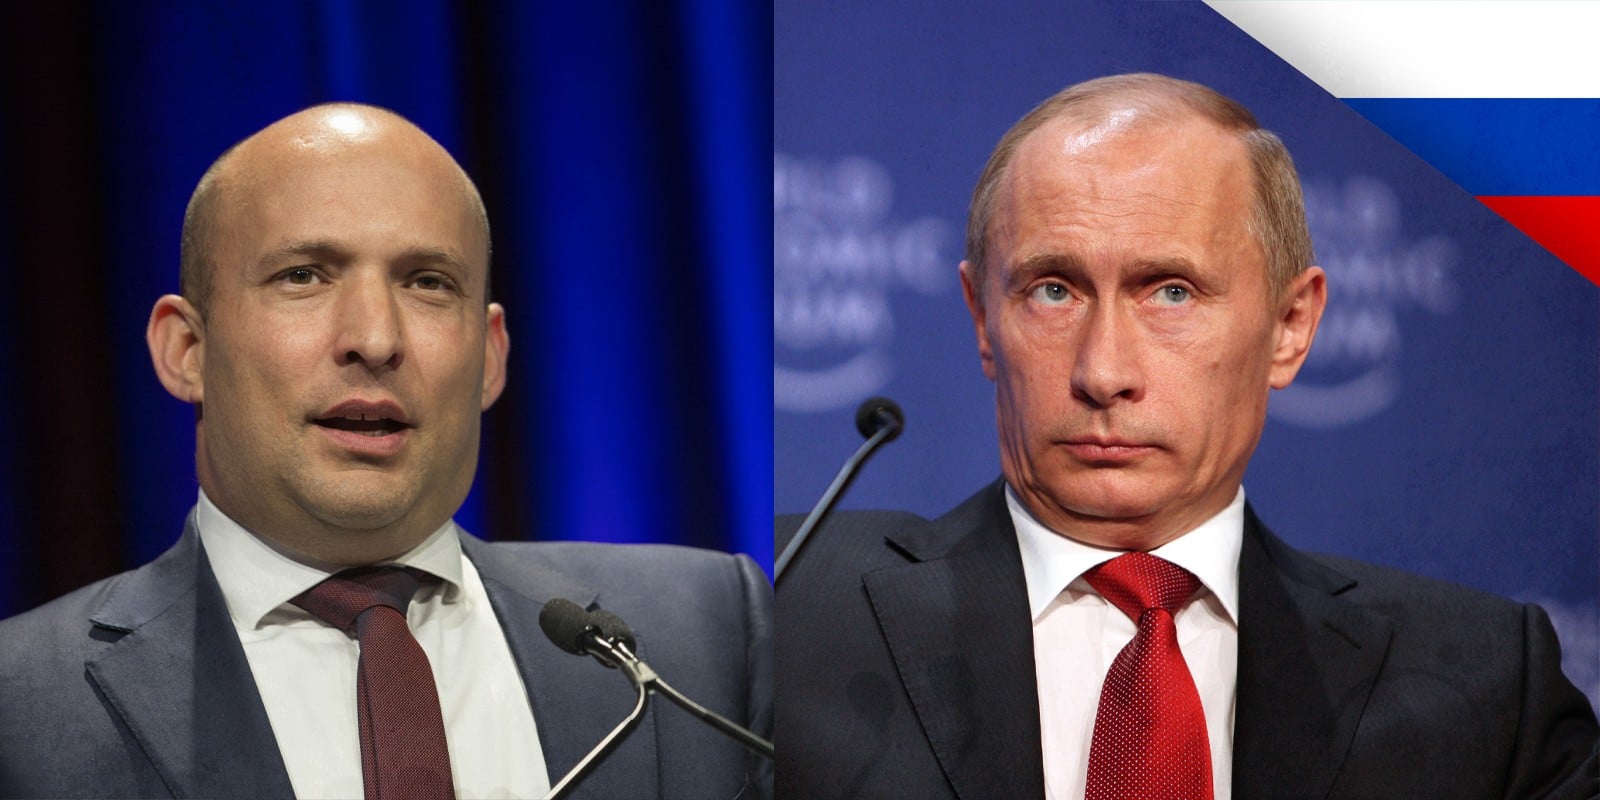 Putin and Bennett